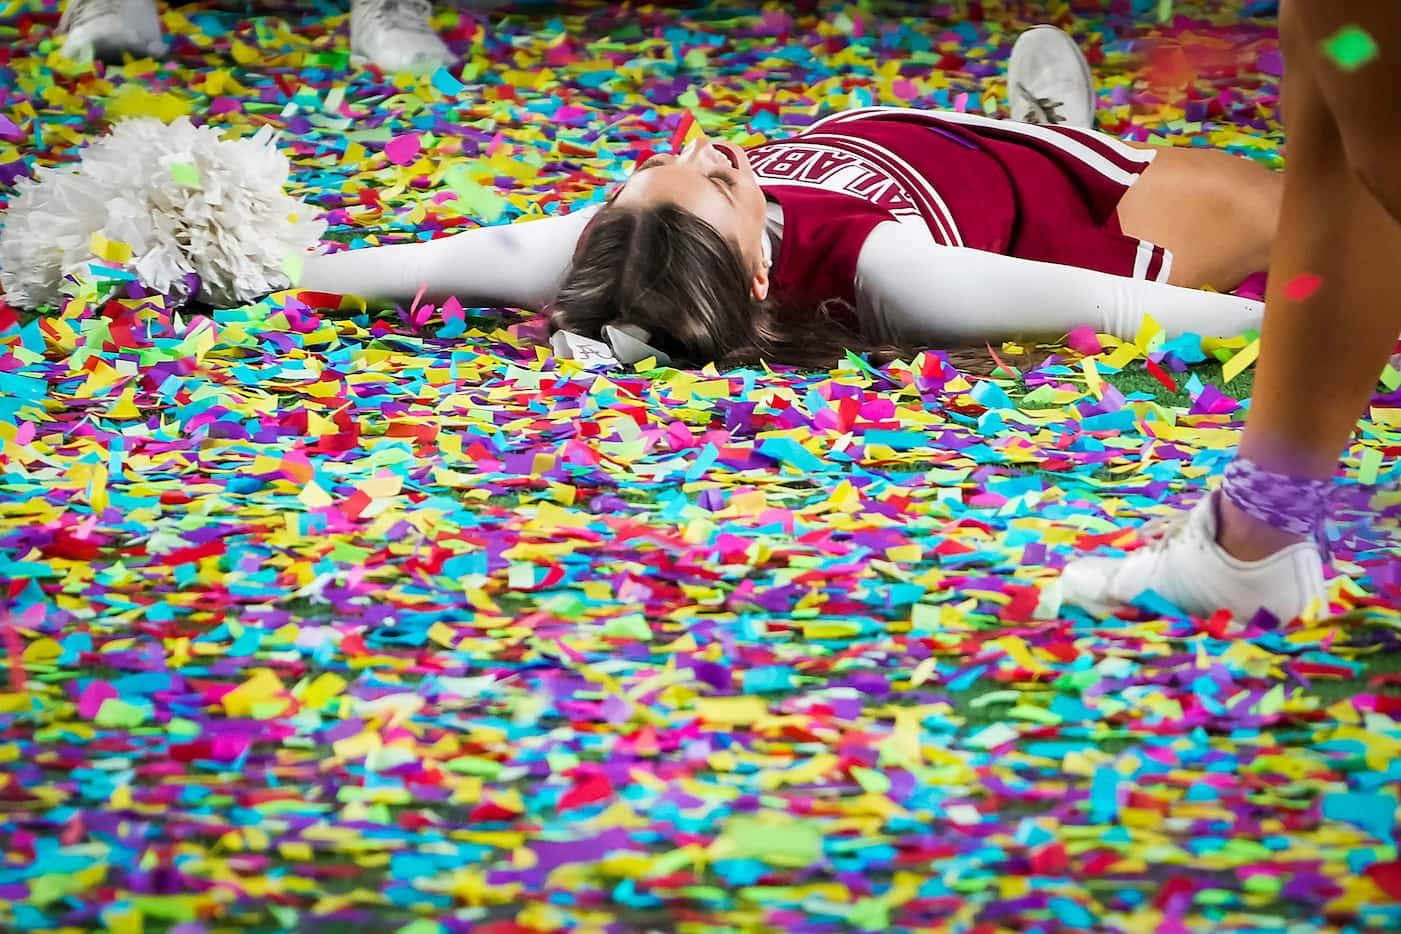 Alabama cheerleaders celebrate in falling confetti after a 27-7 victory over Cincinnati in...